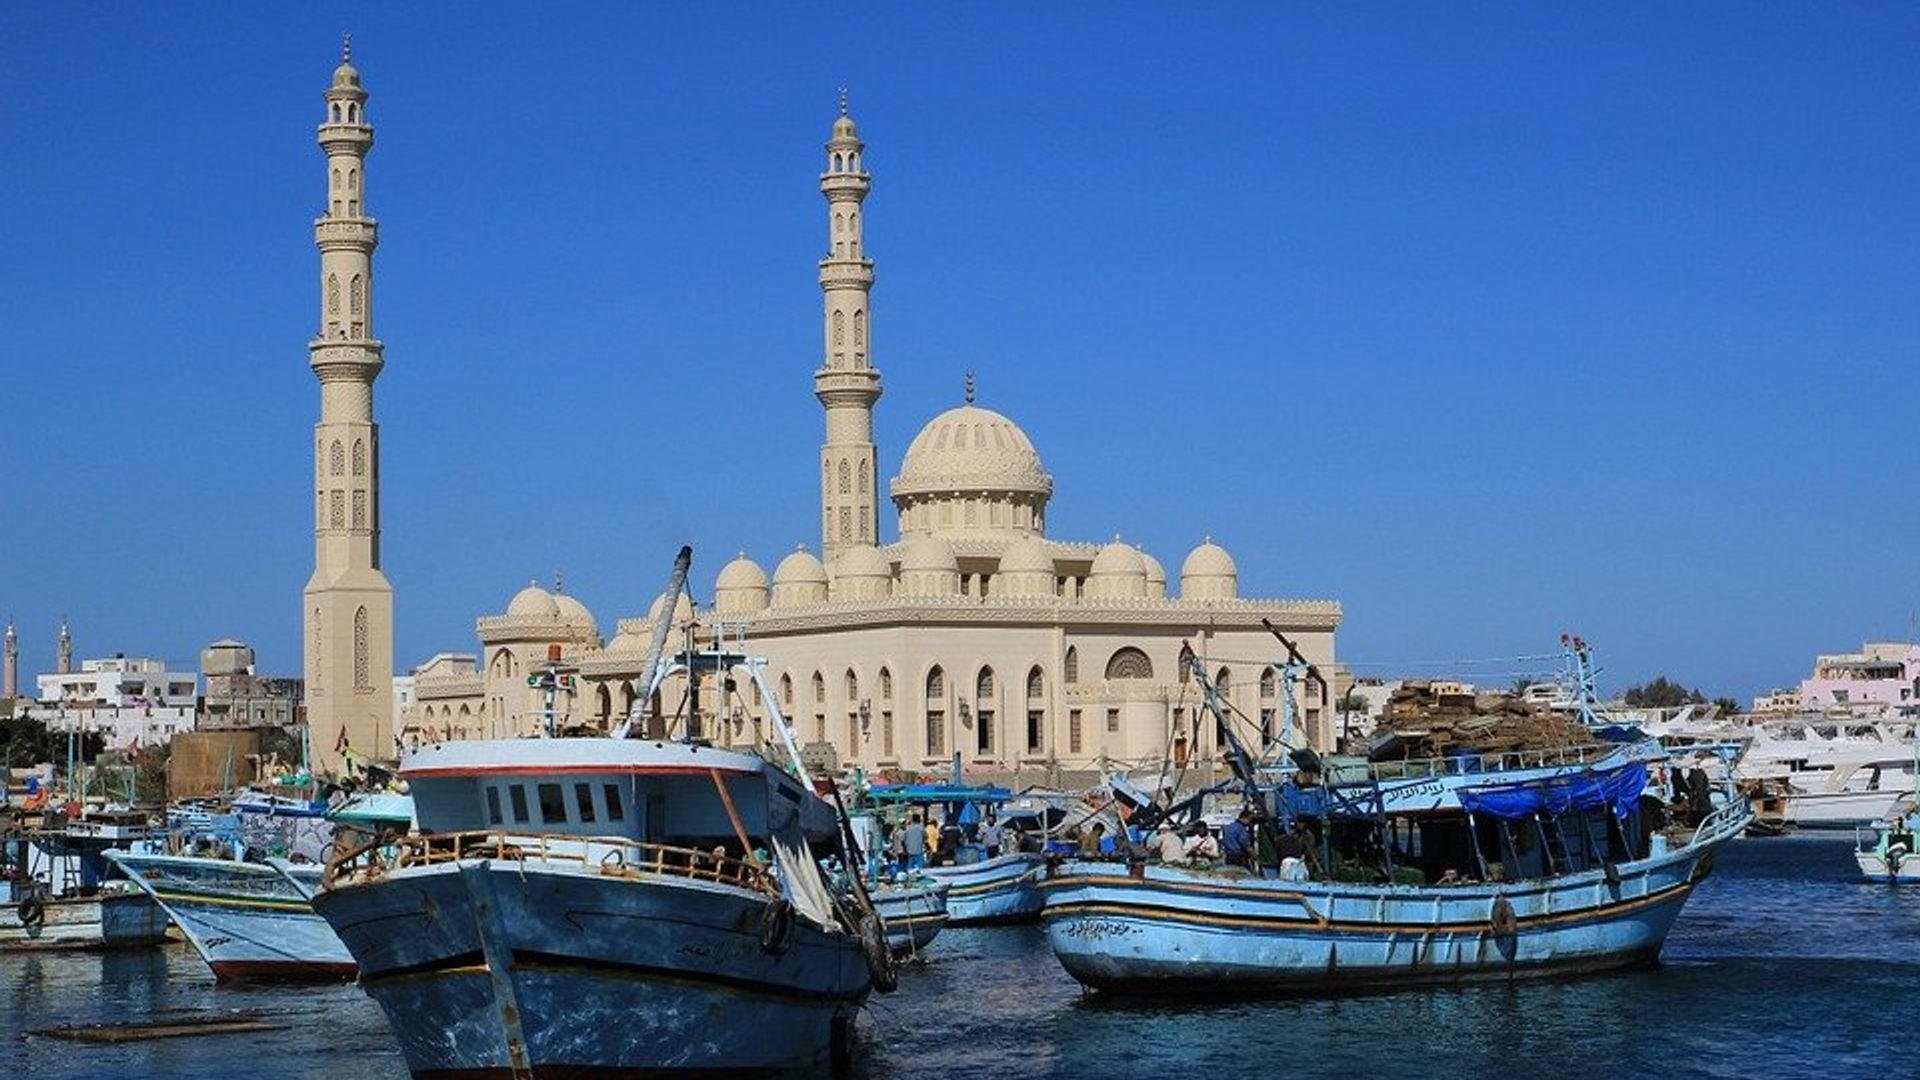 Sejur Cairo & plaja Hurghada, 10 zile - februarie 2022